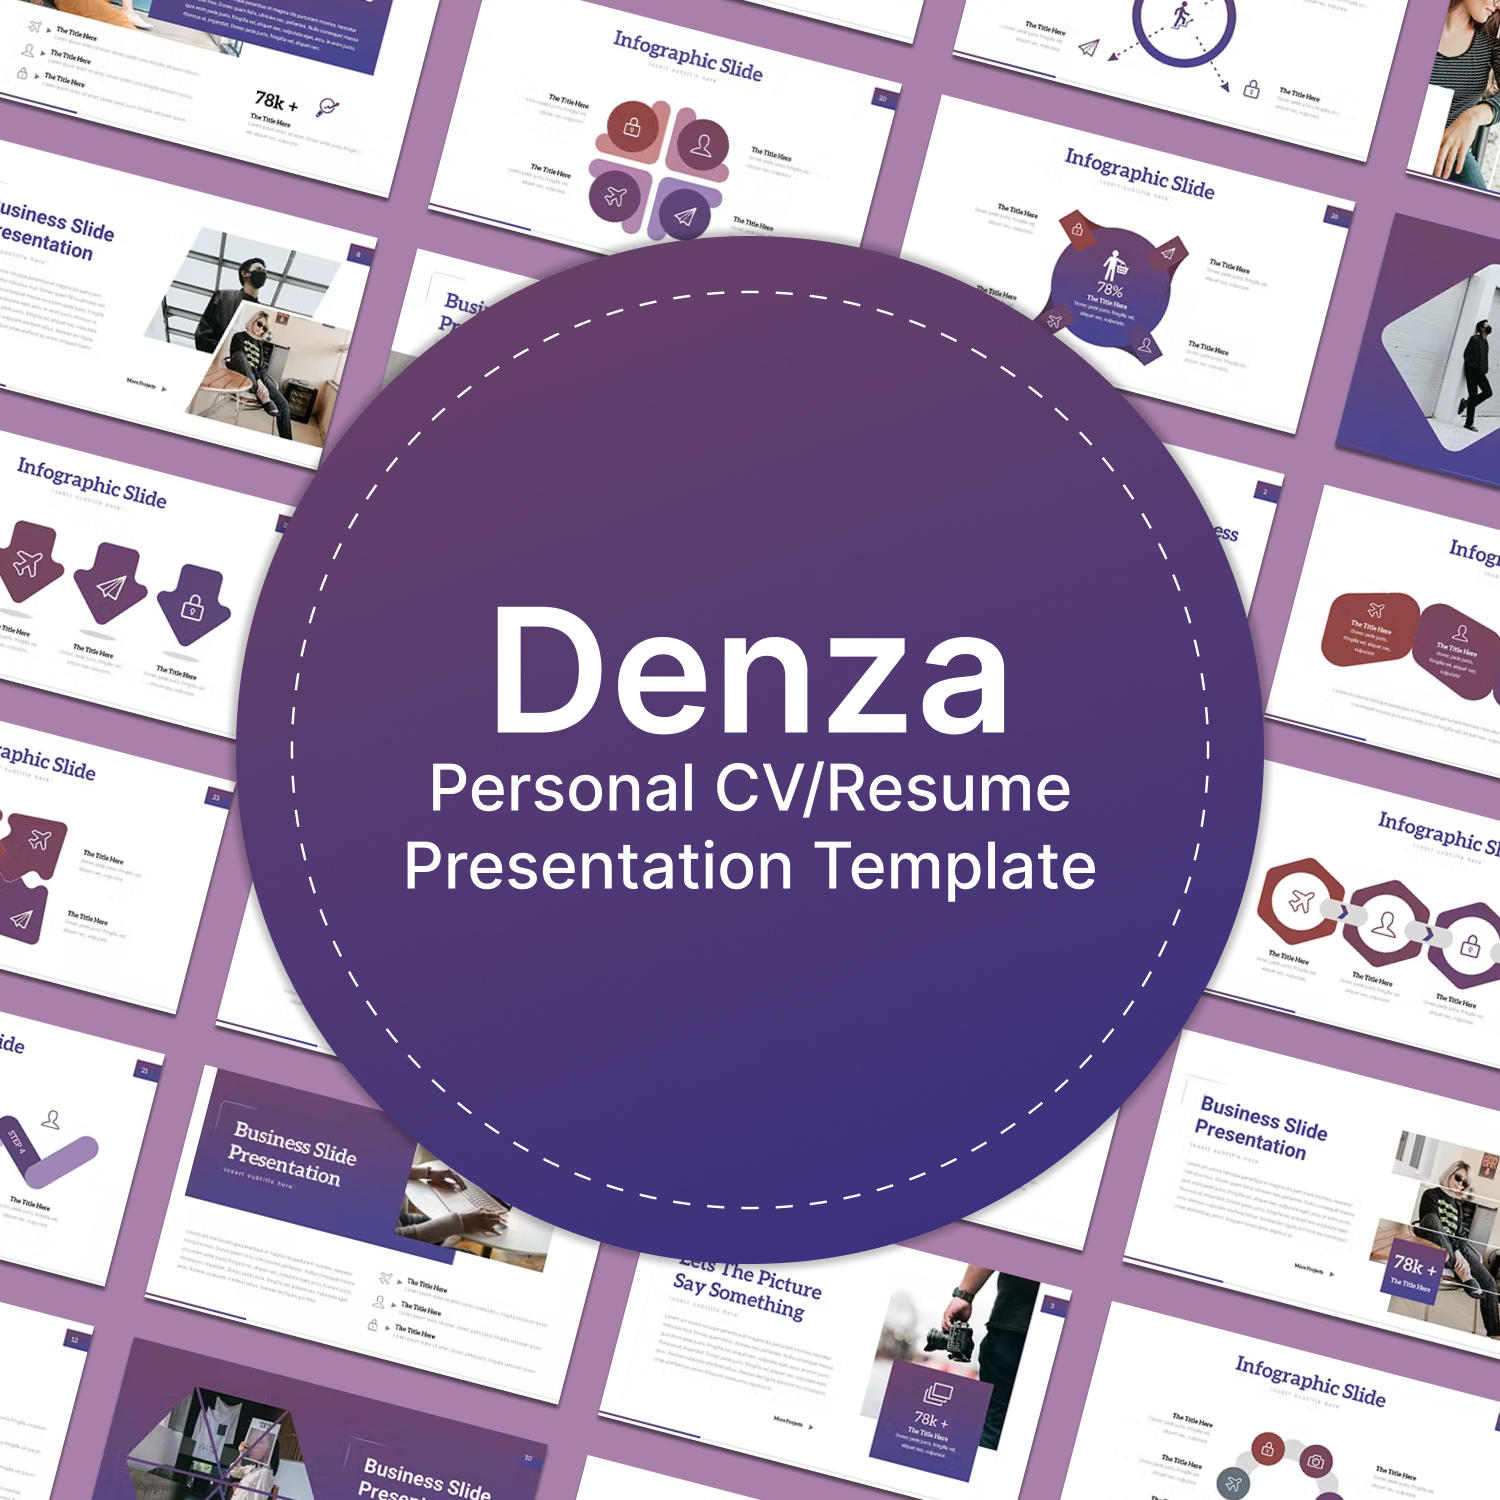 Preview denza personal cvresume presentation template.